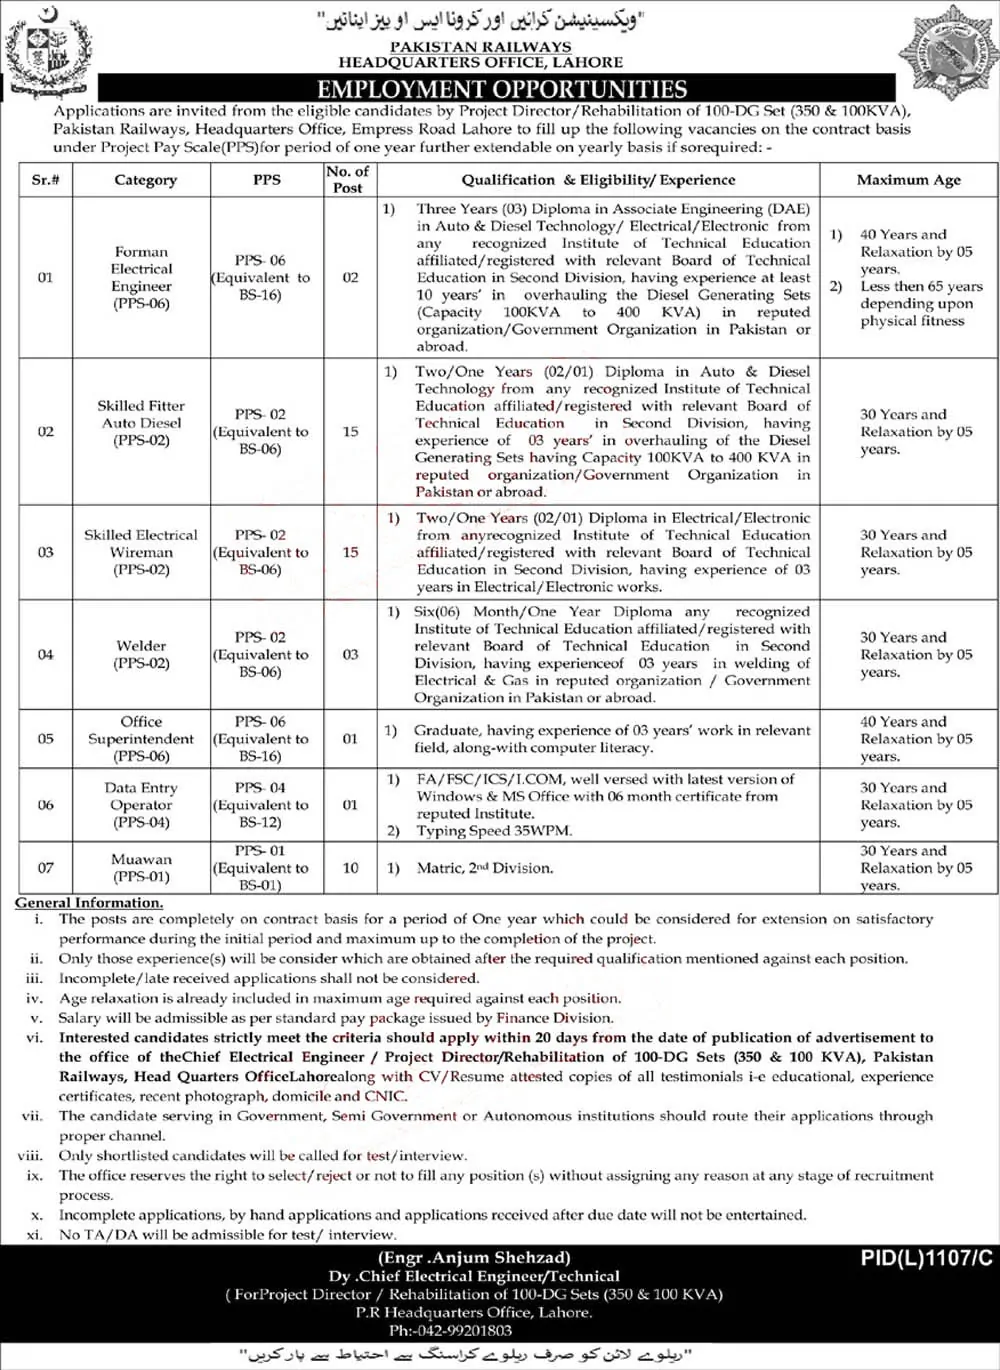 Pakistan Railways Jobs in Headquarters Offices 2022